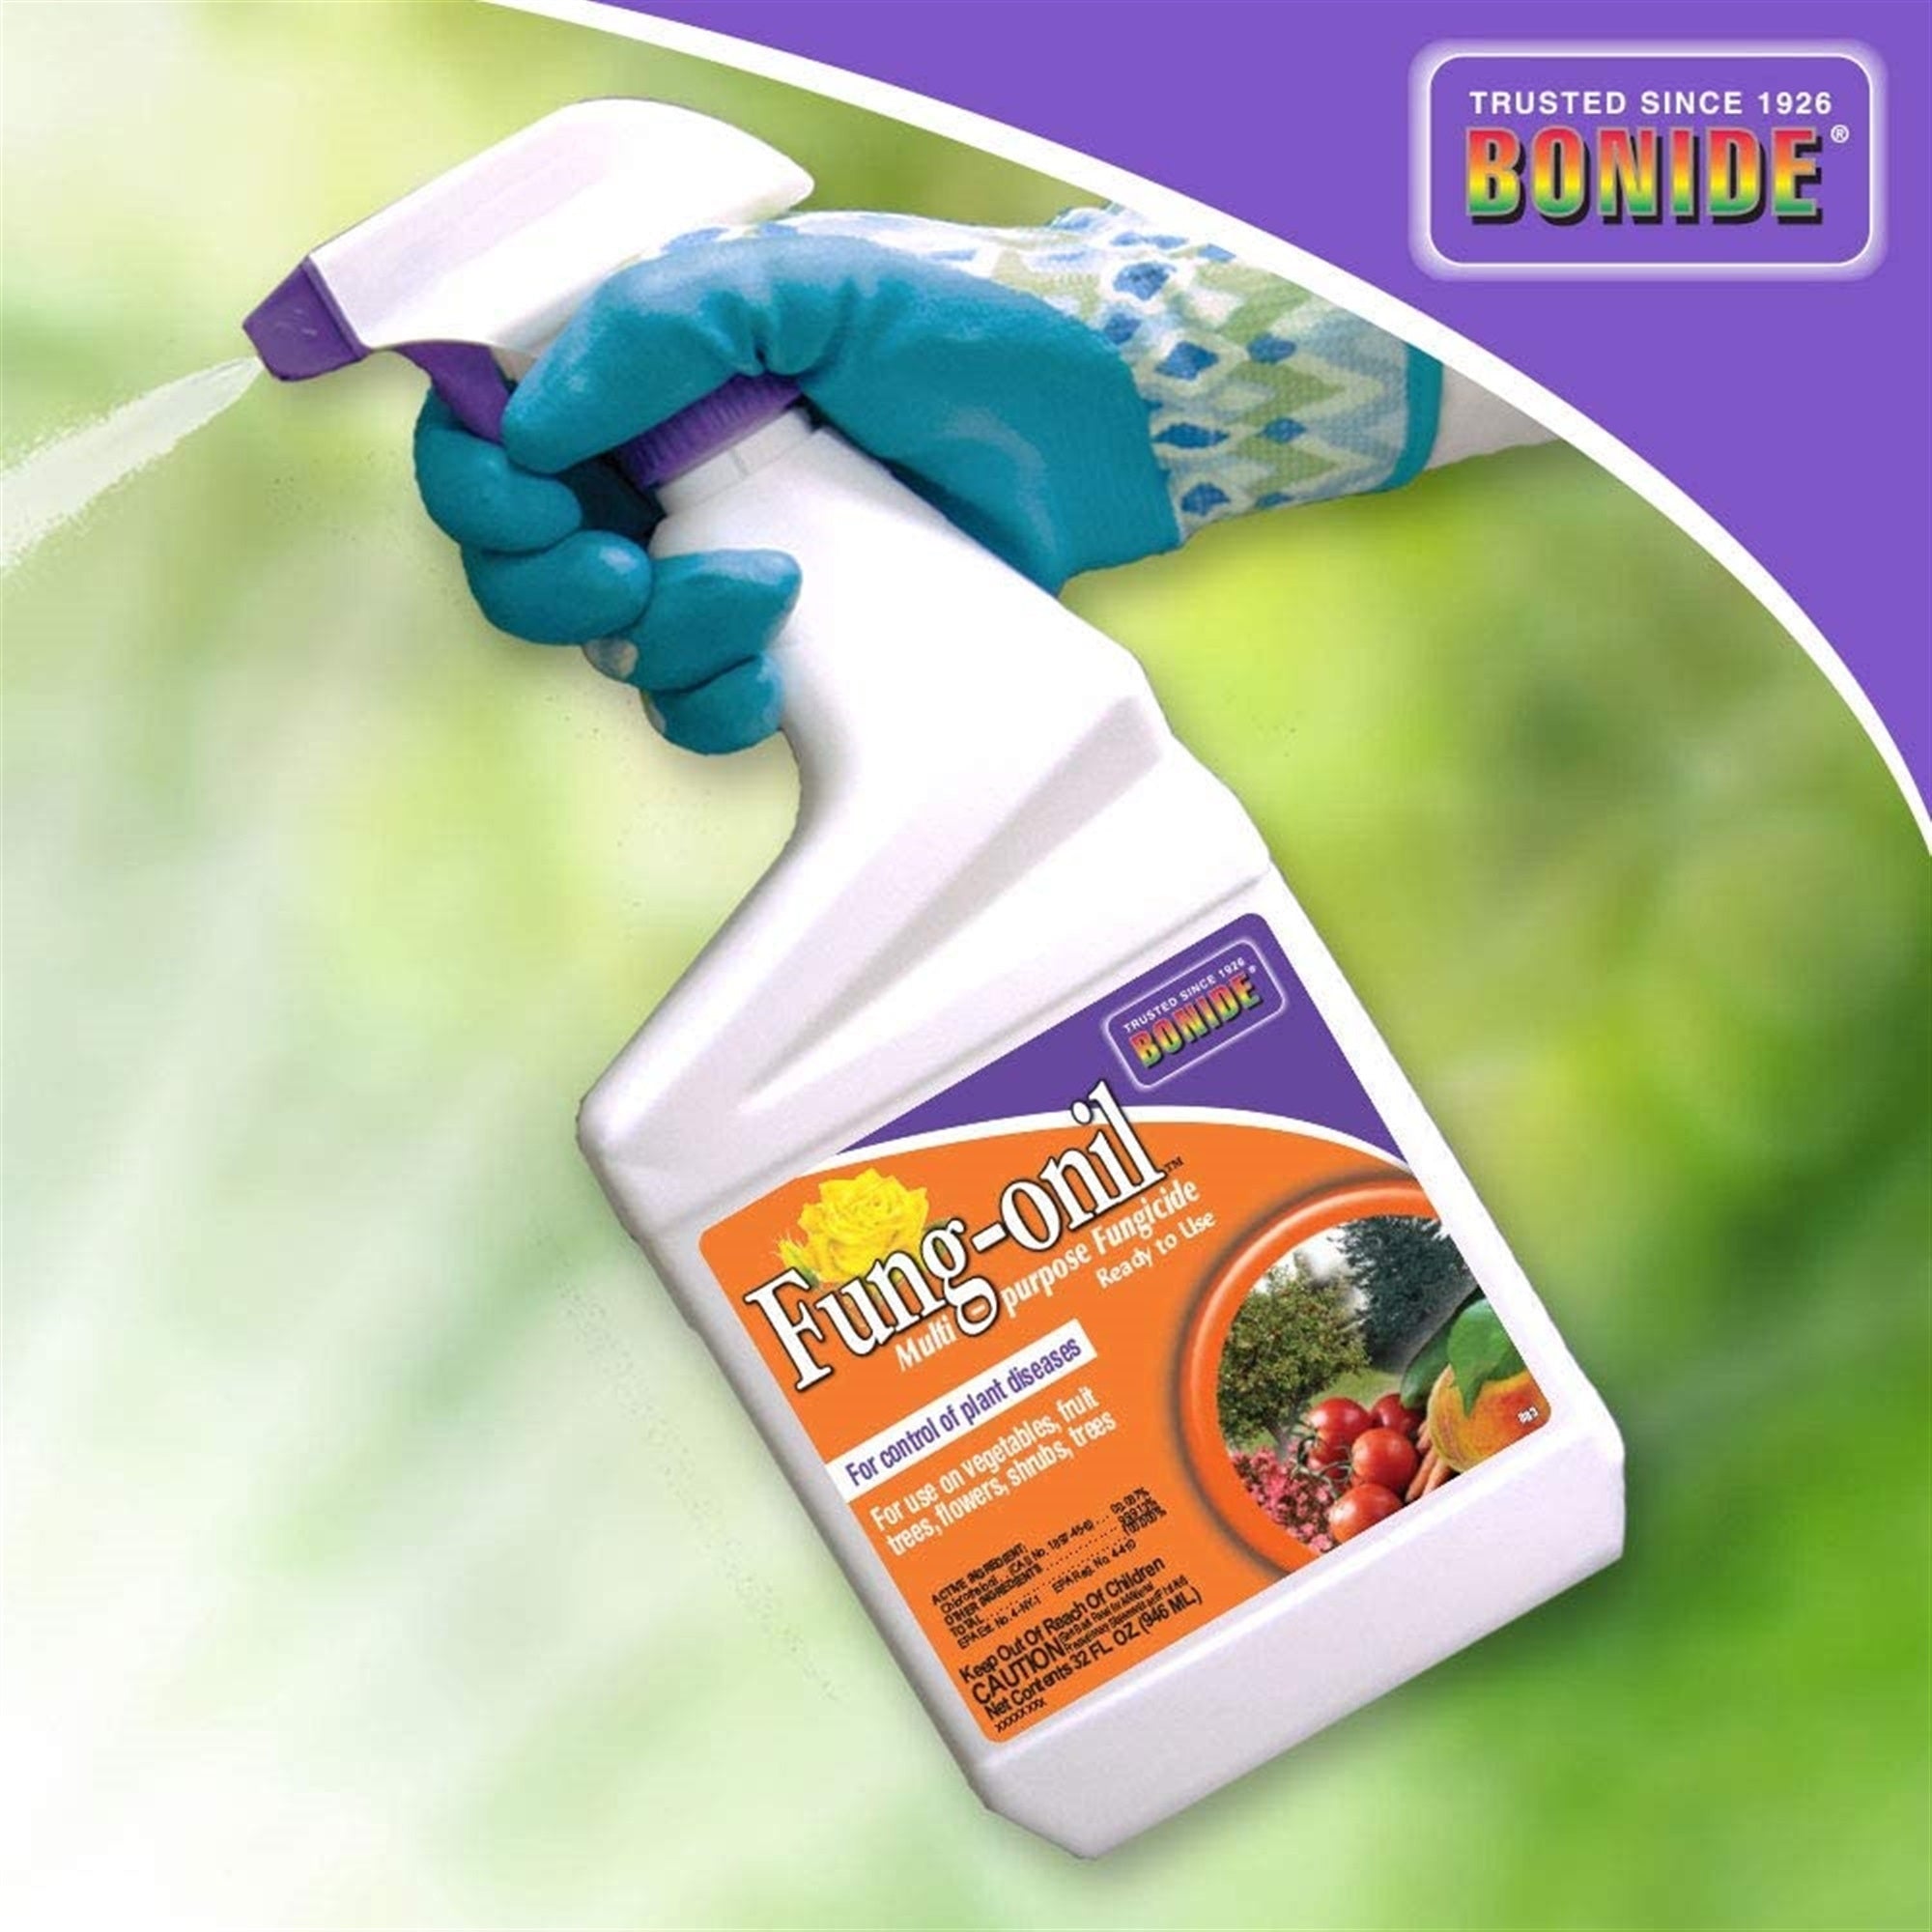 Bonide Fungal Disease Control, Fung-onil Multi-Purpose RTU Fungicide (32 oz.)